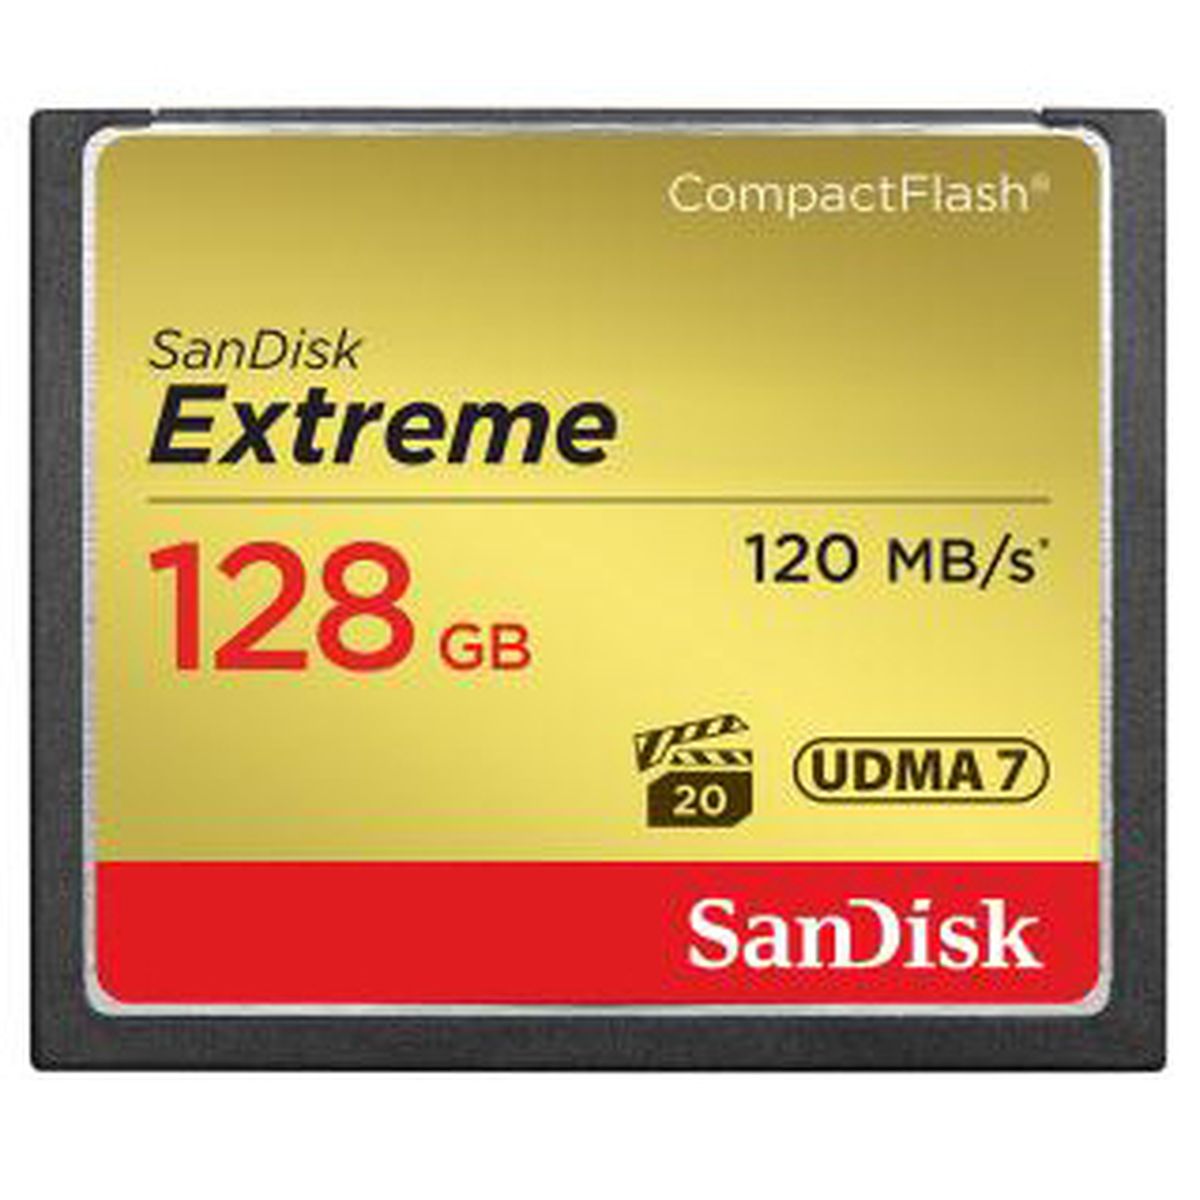 SanDisk 128 GB CompactFlash Extreme